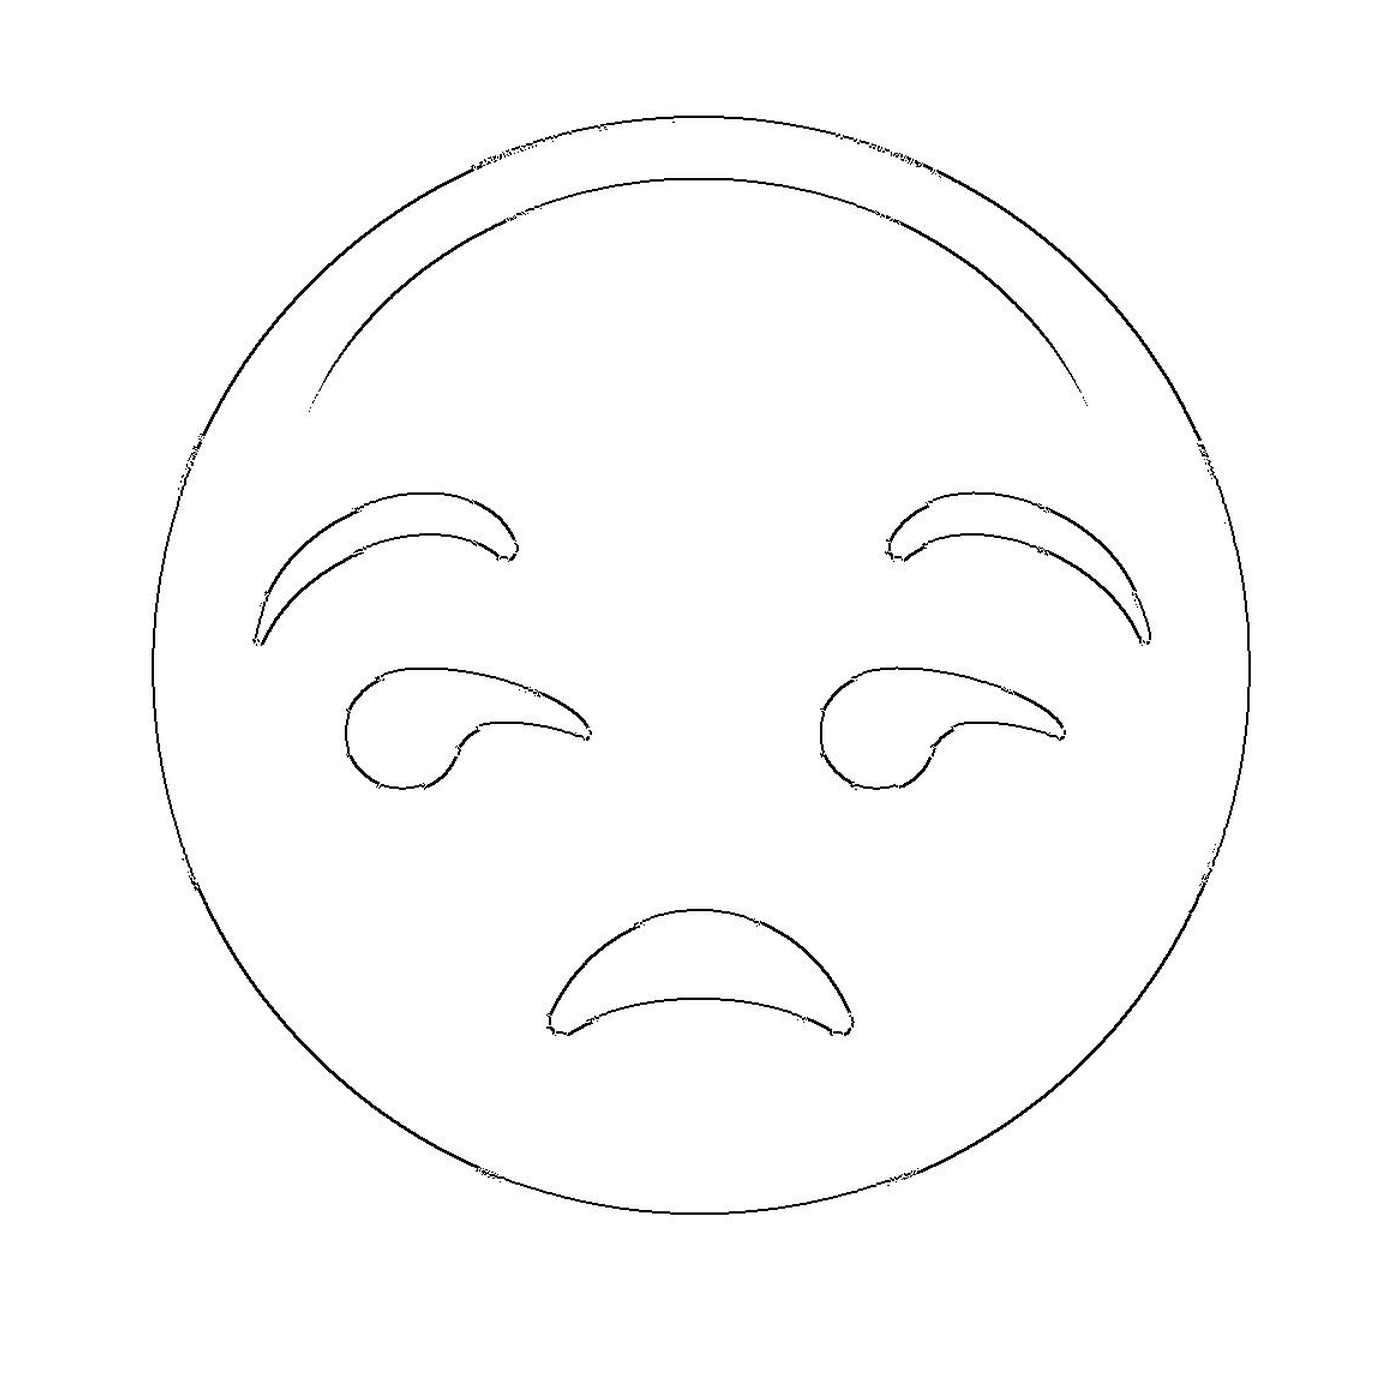  Un rostro triste dibujado 